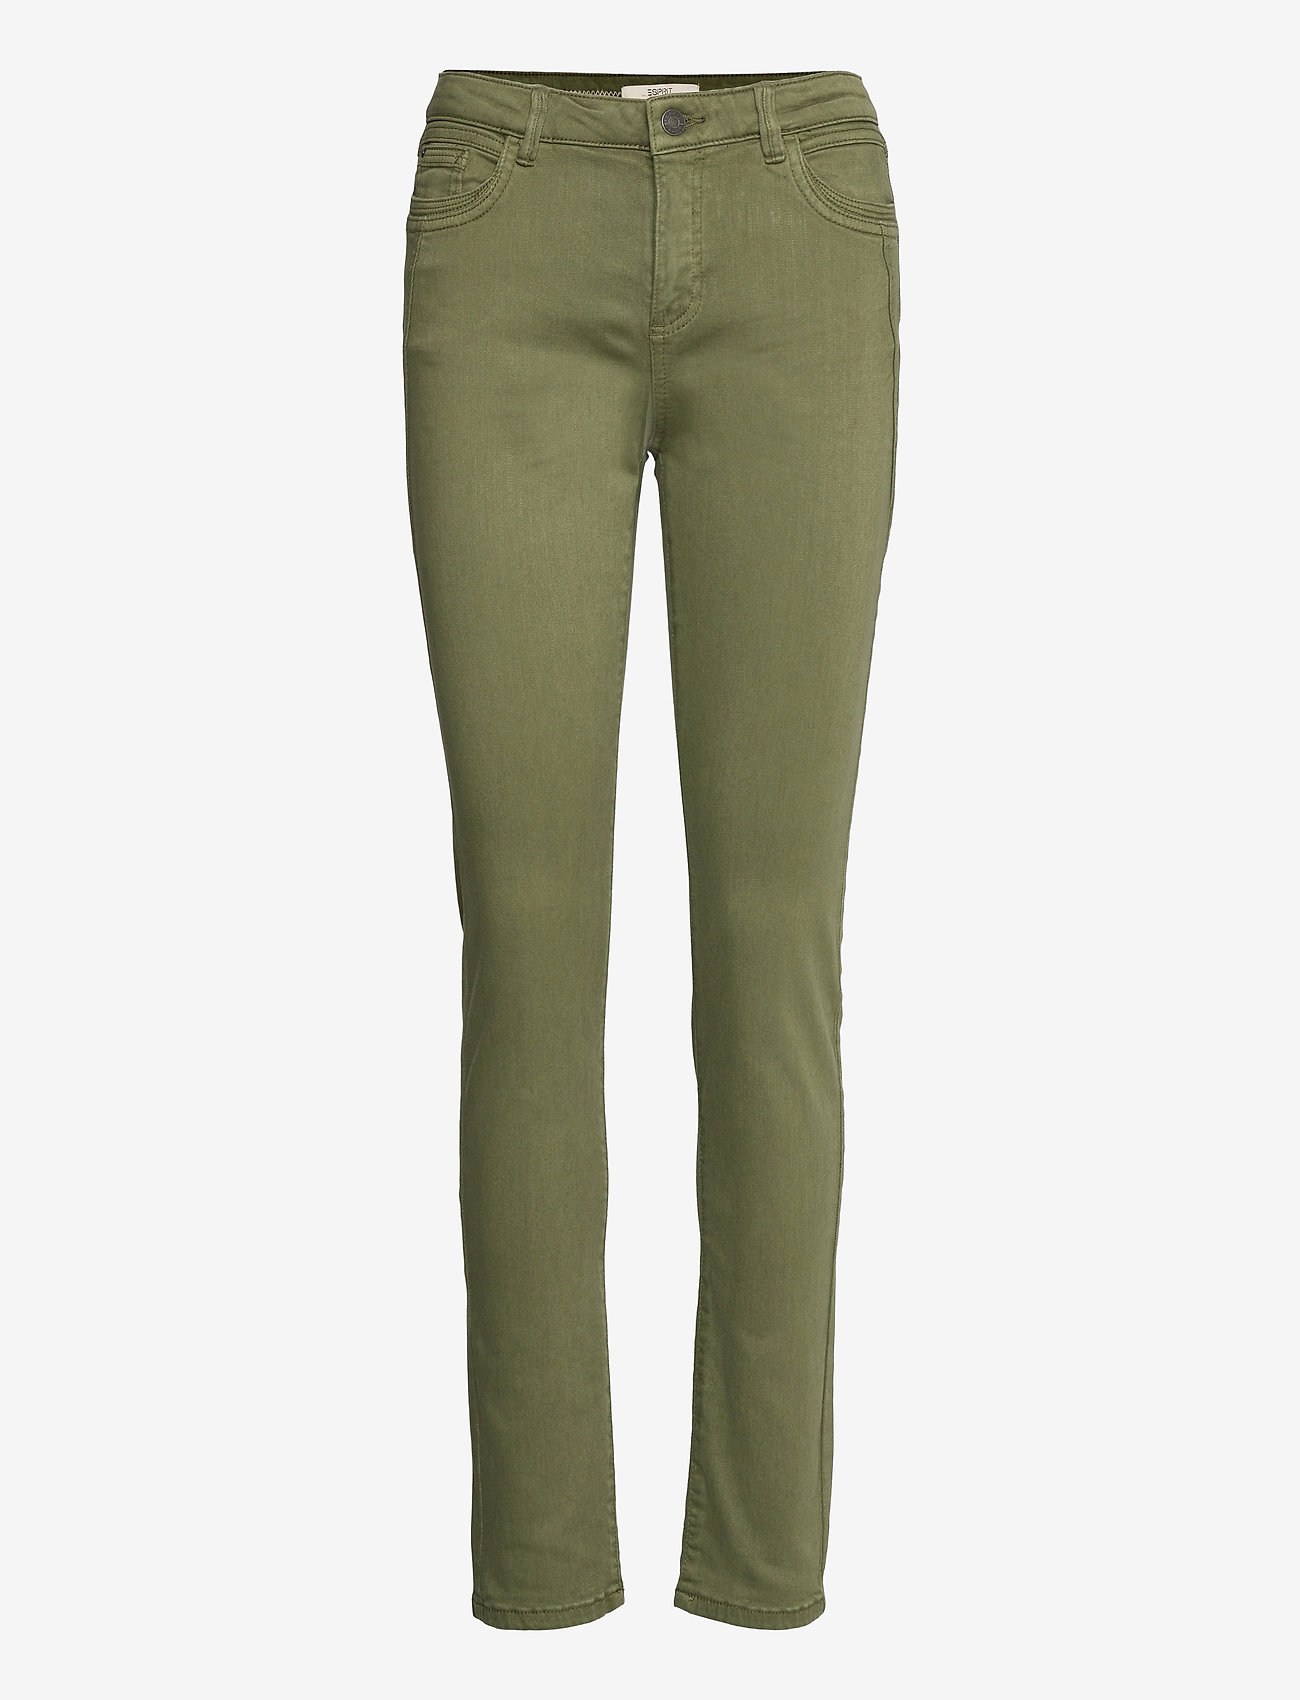 Esprit Casual Pants Woven Khaki Green 32499 Kr